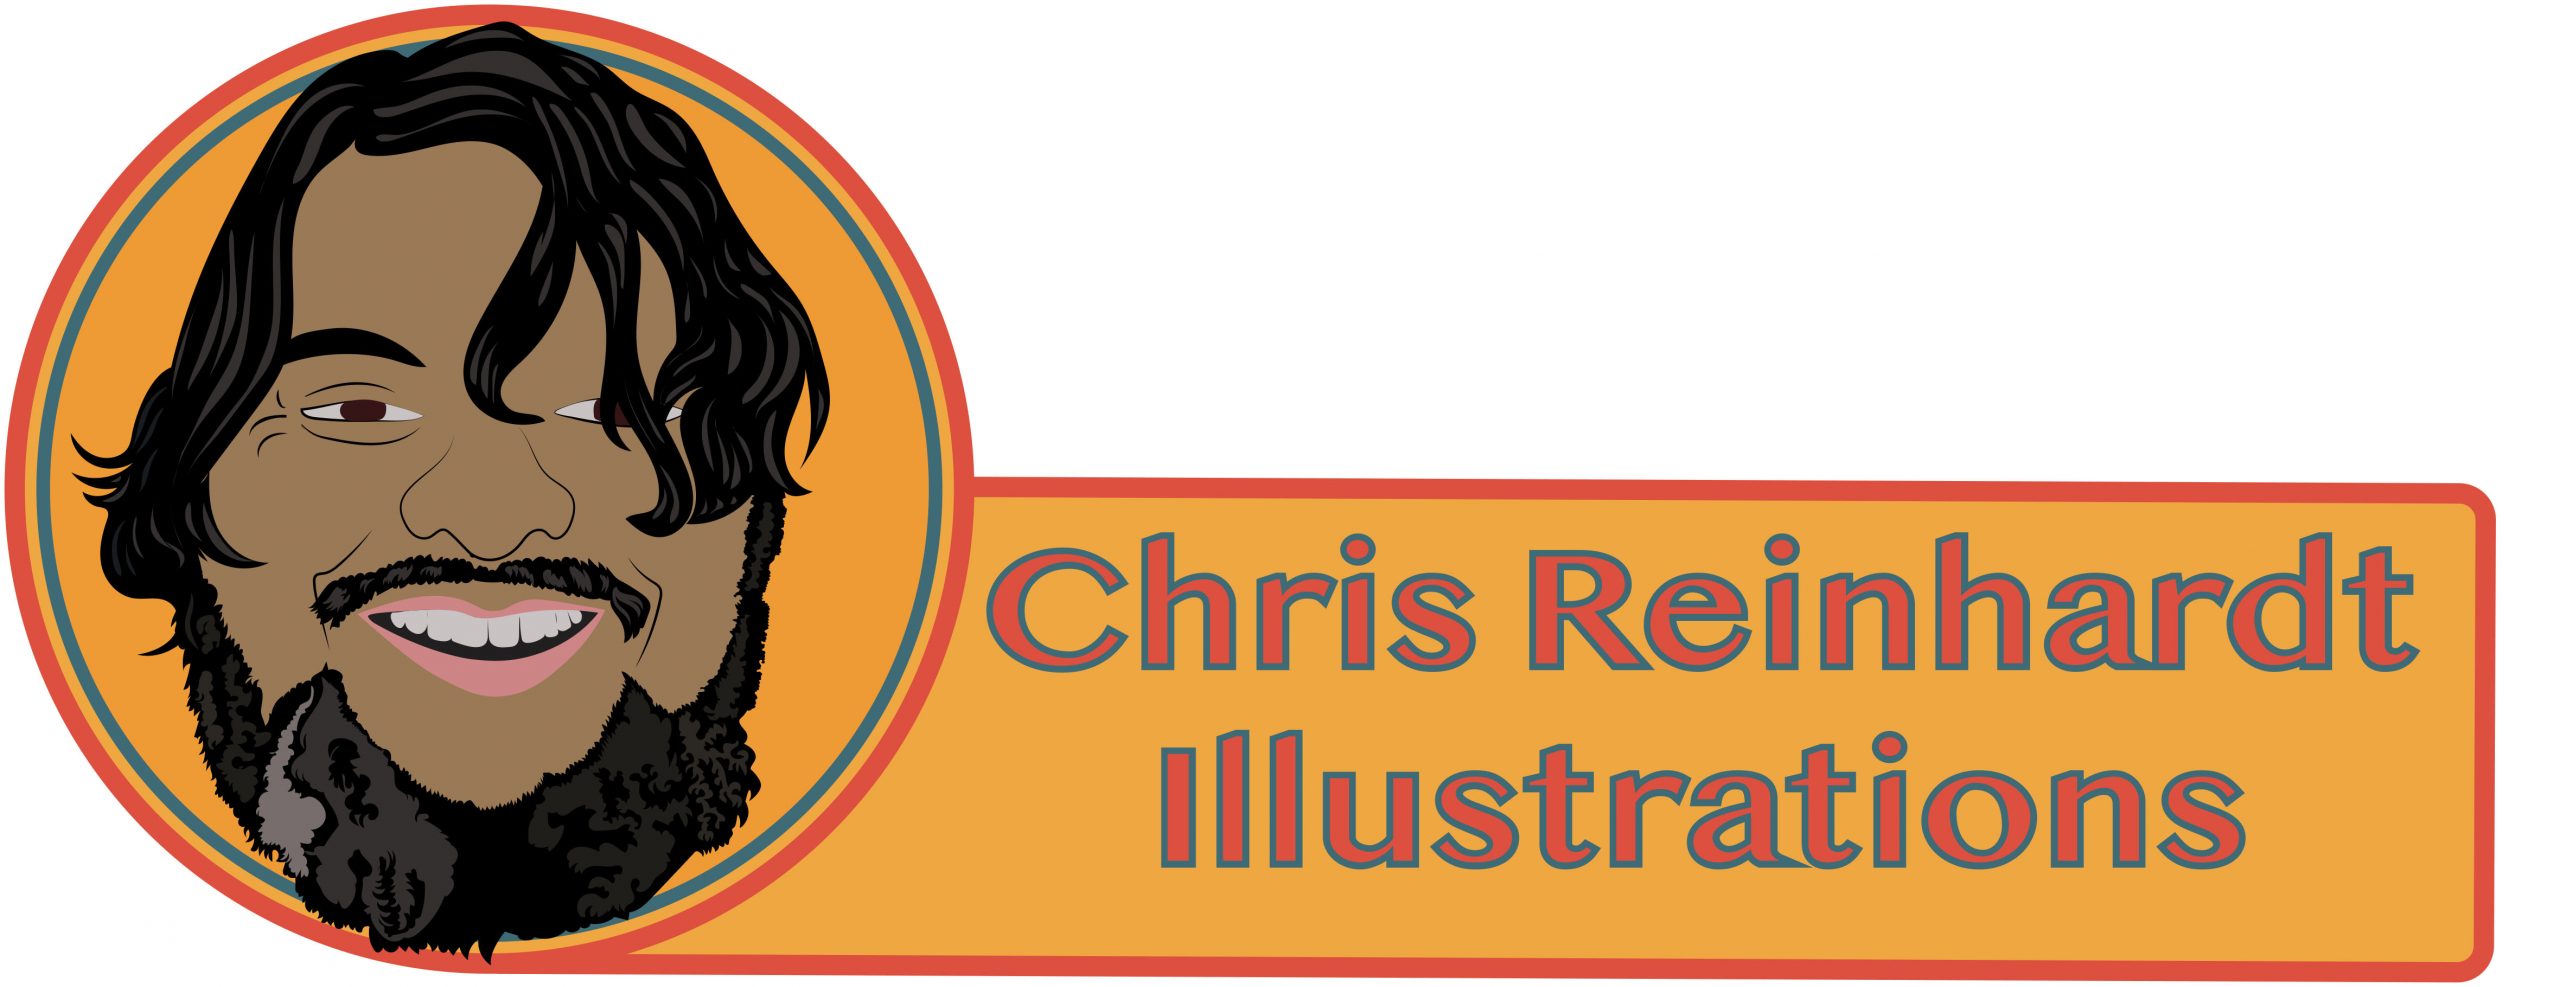 Chris Reinhardt illustrations